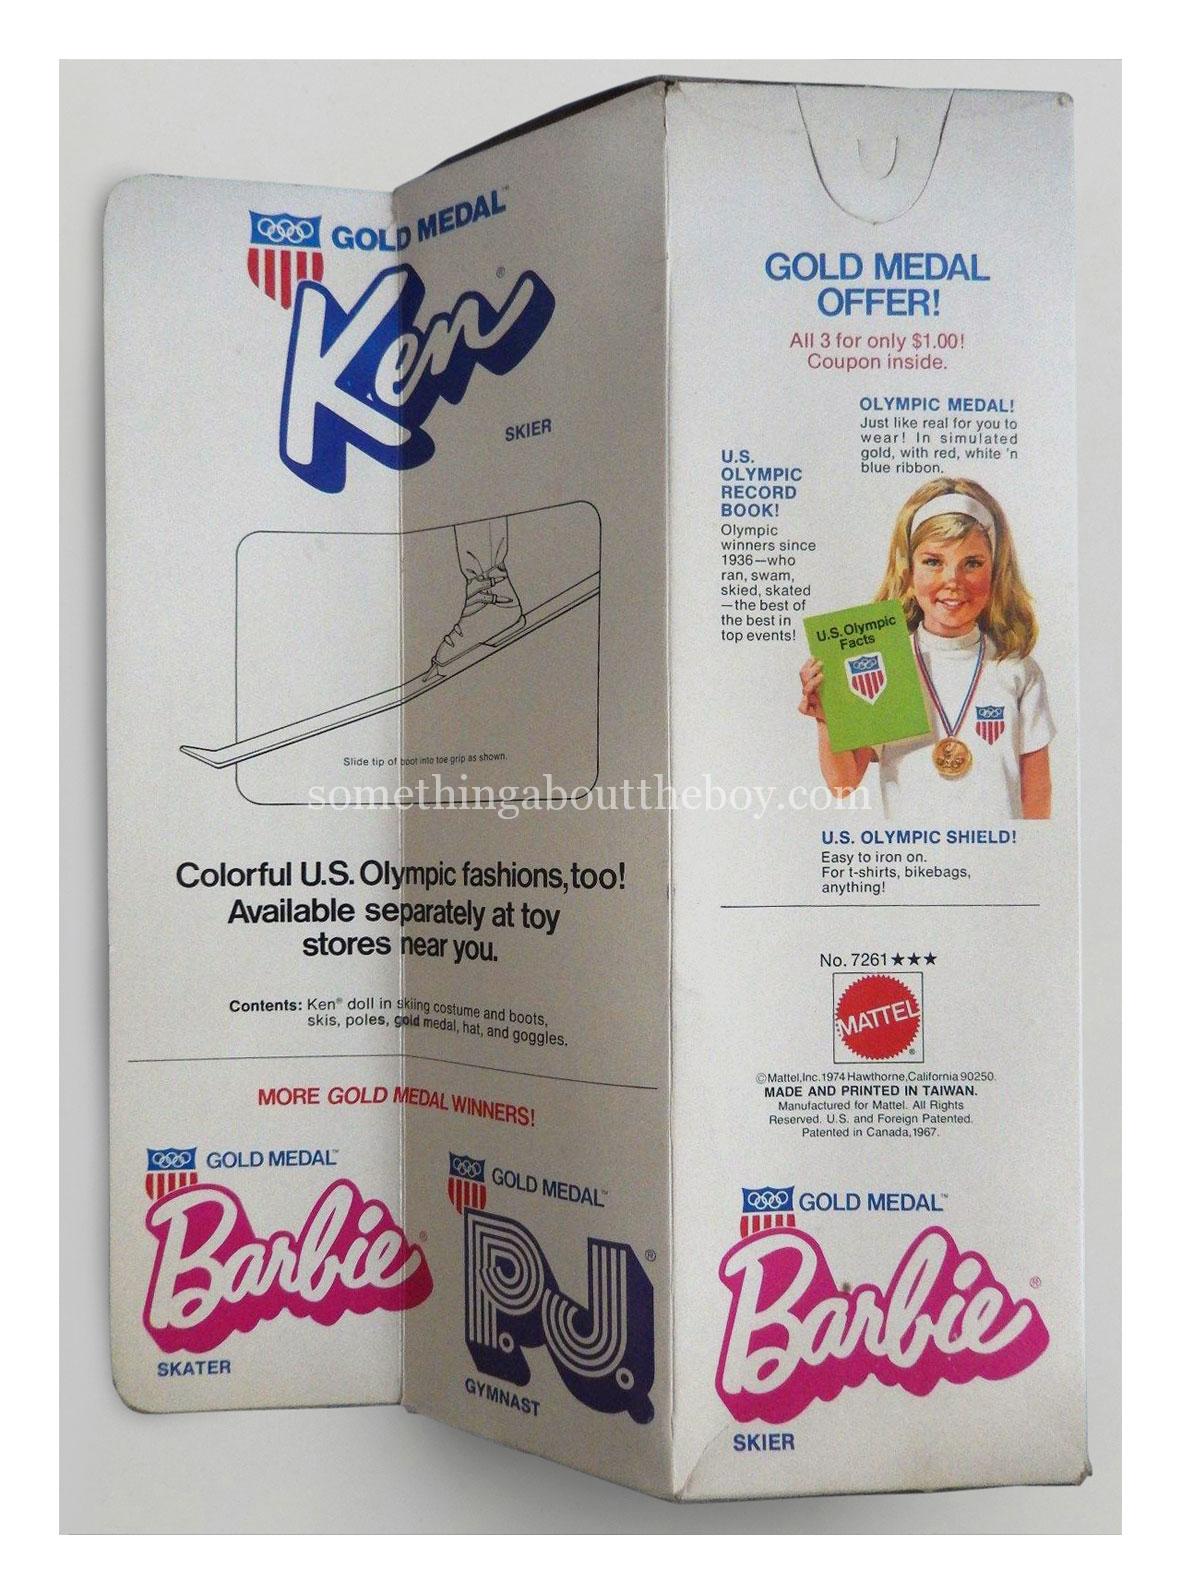 1975 #7261 Gold Medal Skier Ken reverse of packaging